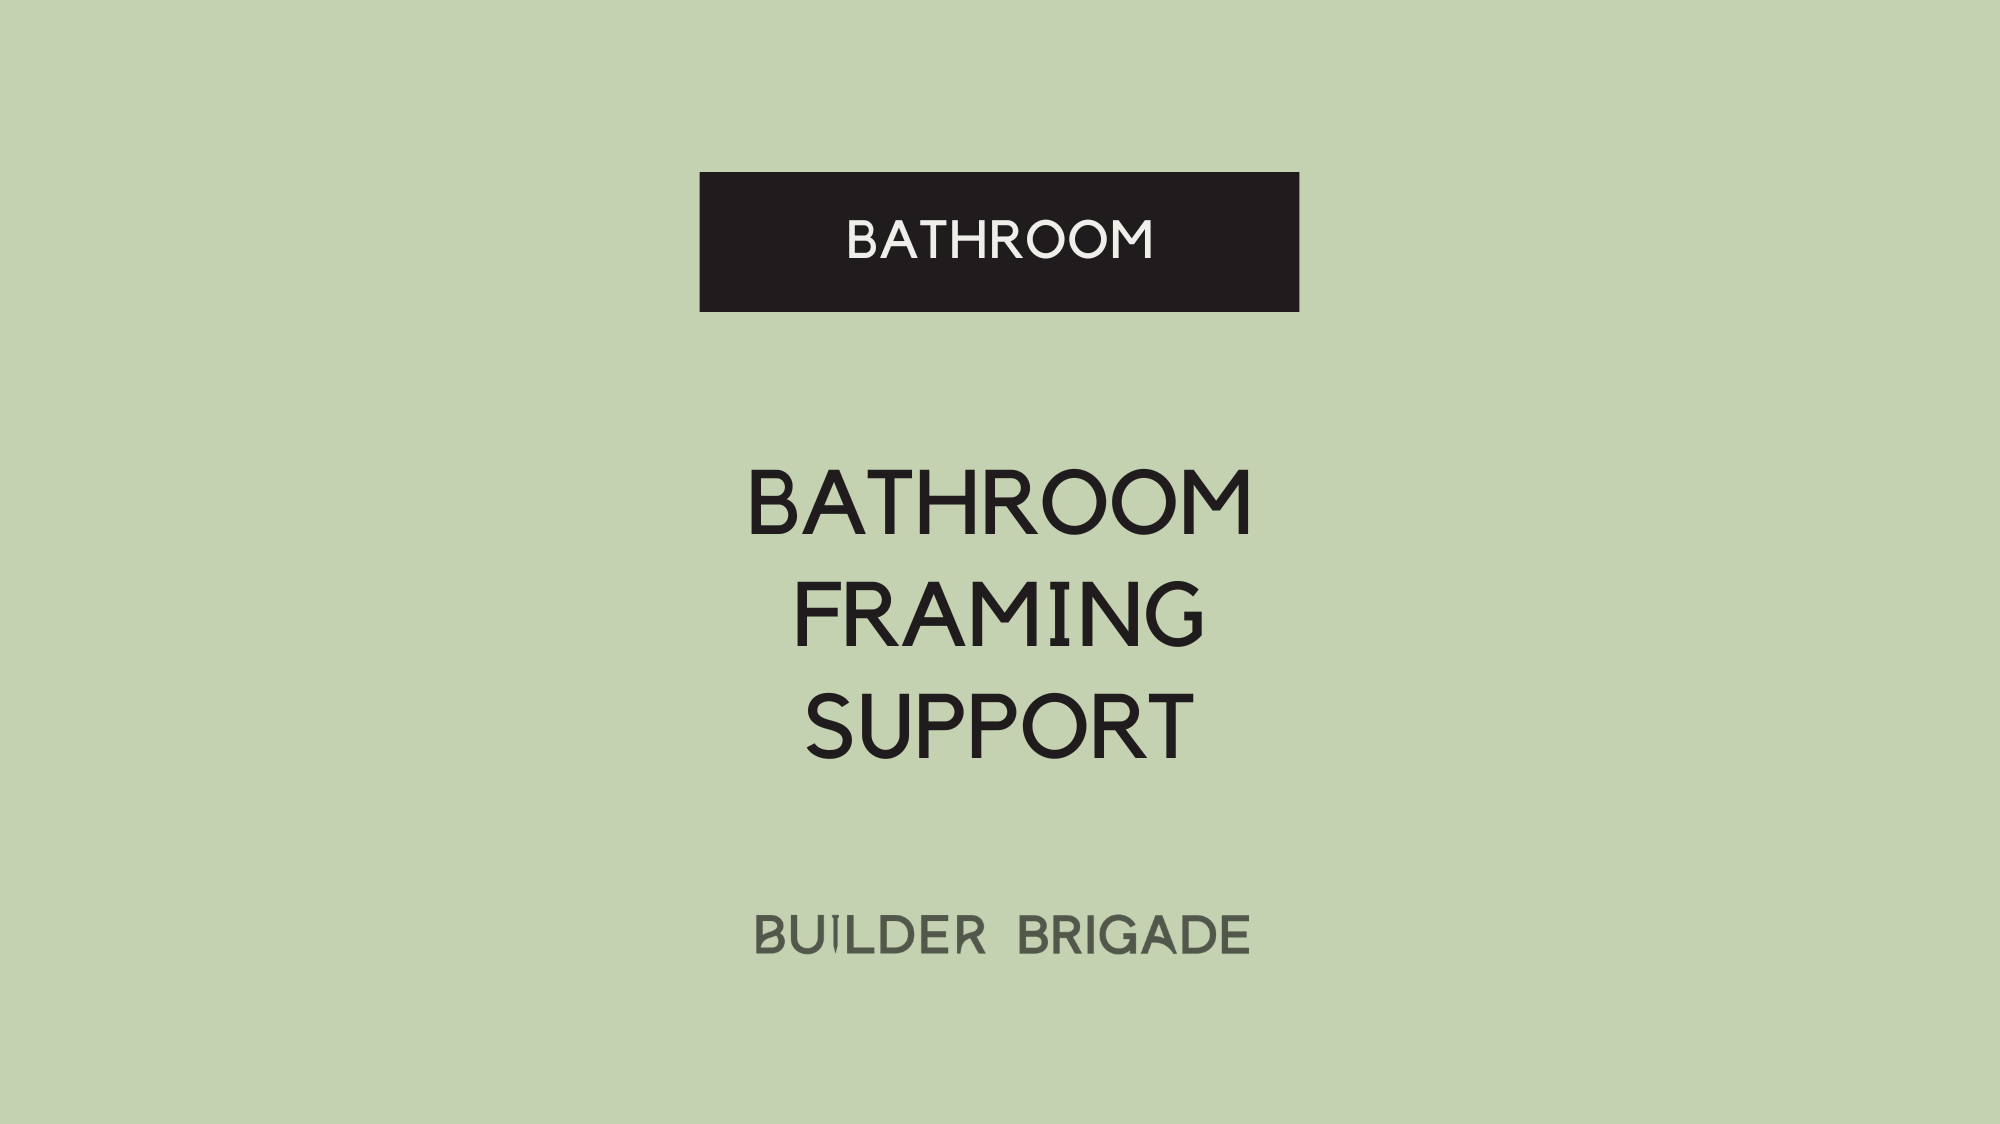 Bathroom framing support